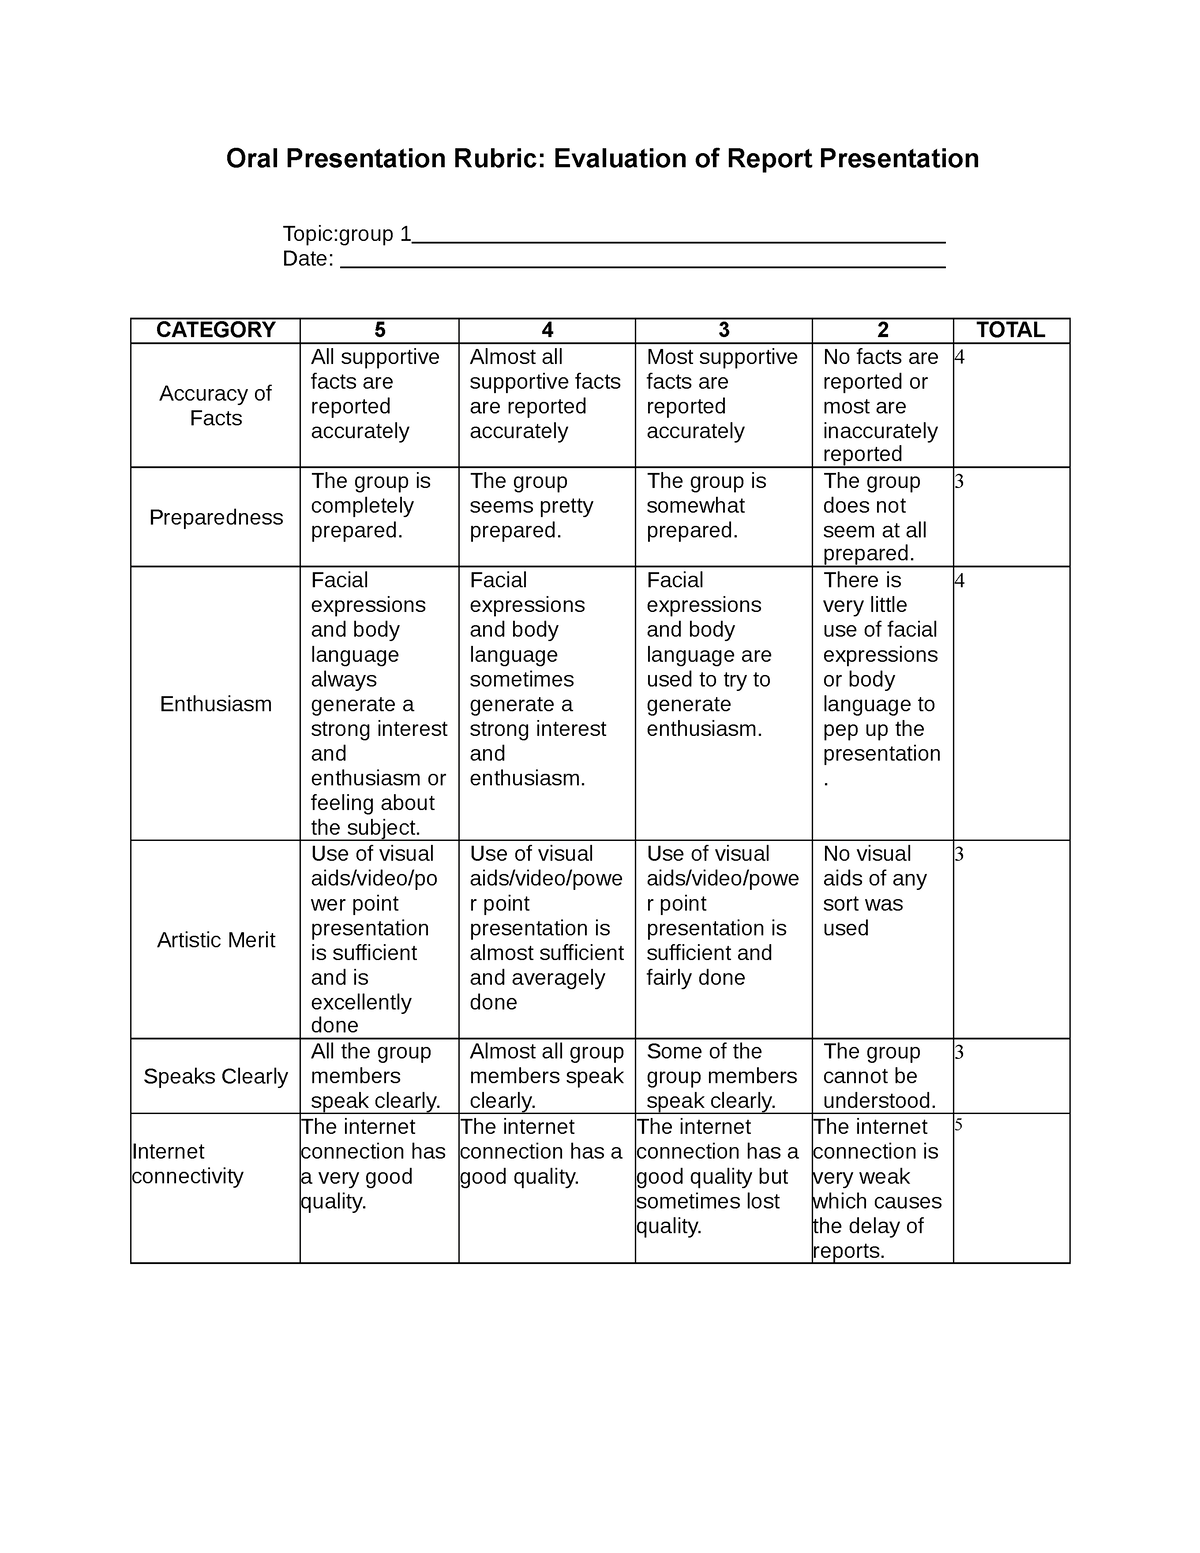 rubric for oral presentation in english pdf